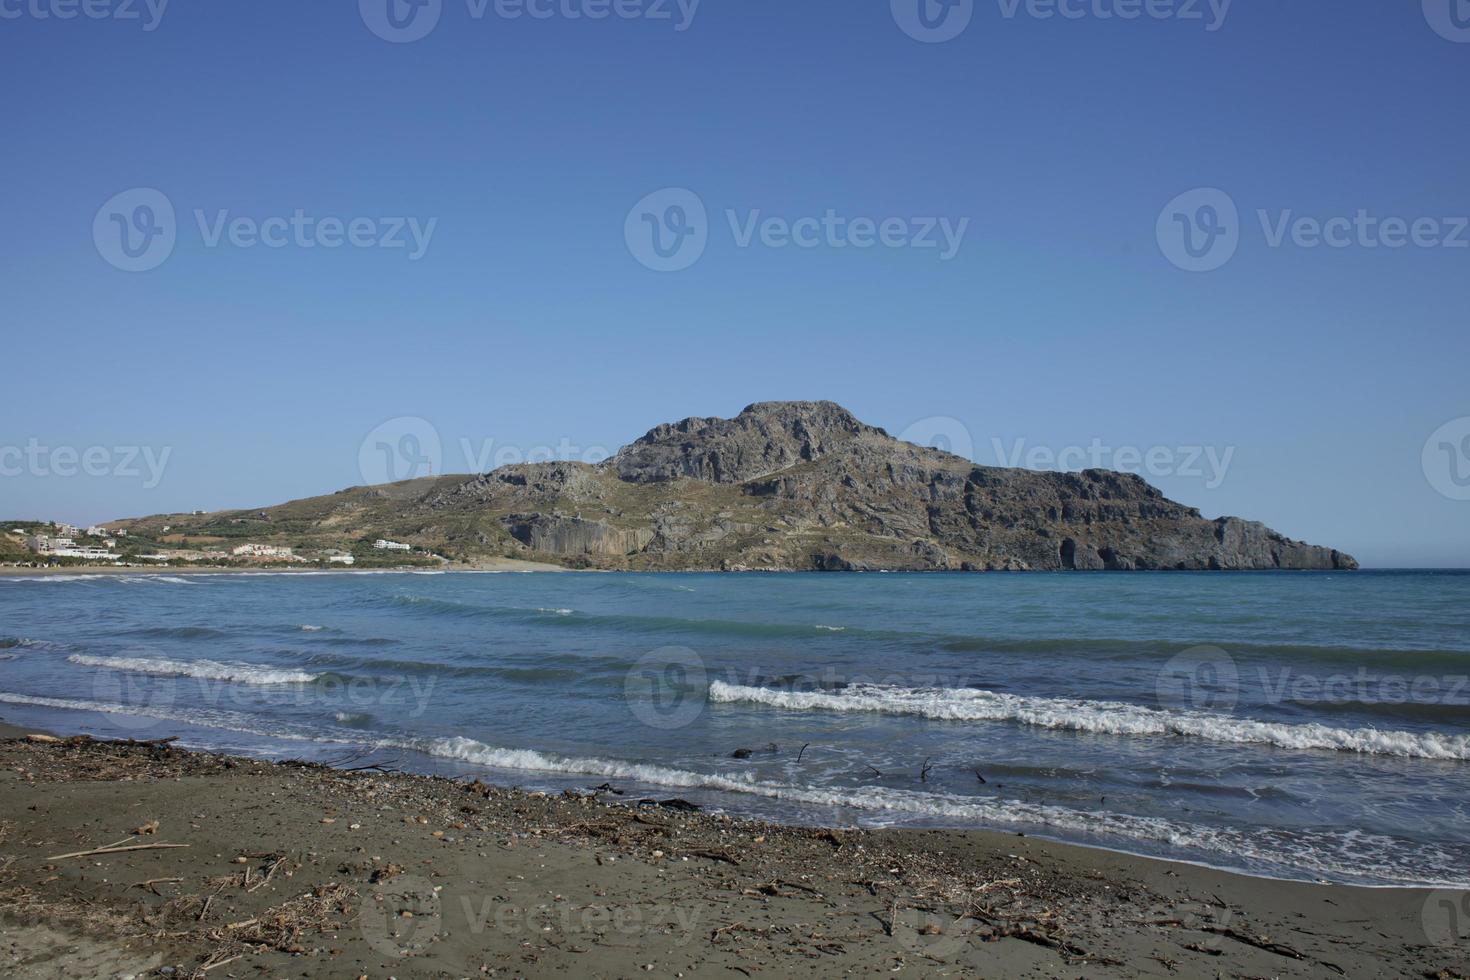 plakias beach creta island été 2020 covid-19 vacances de saison photo